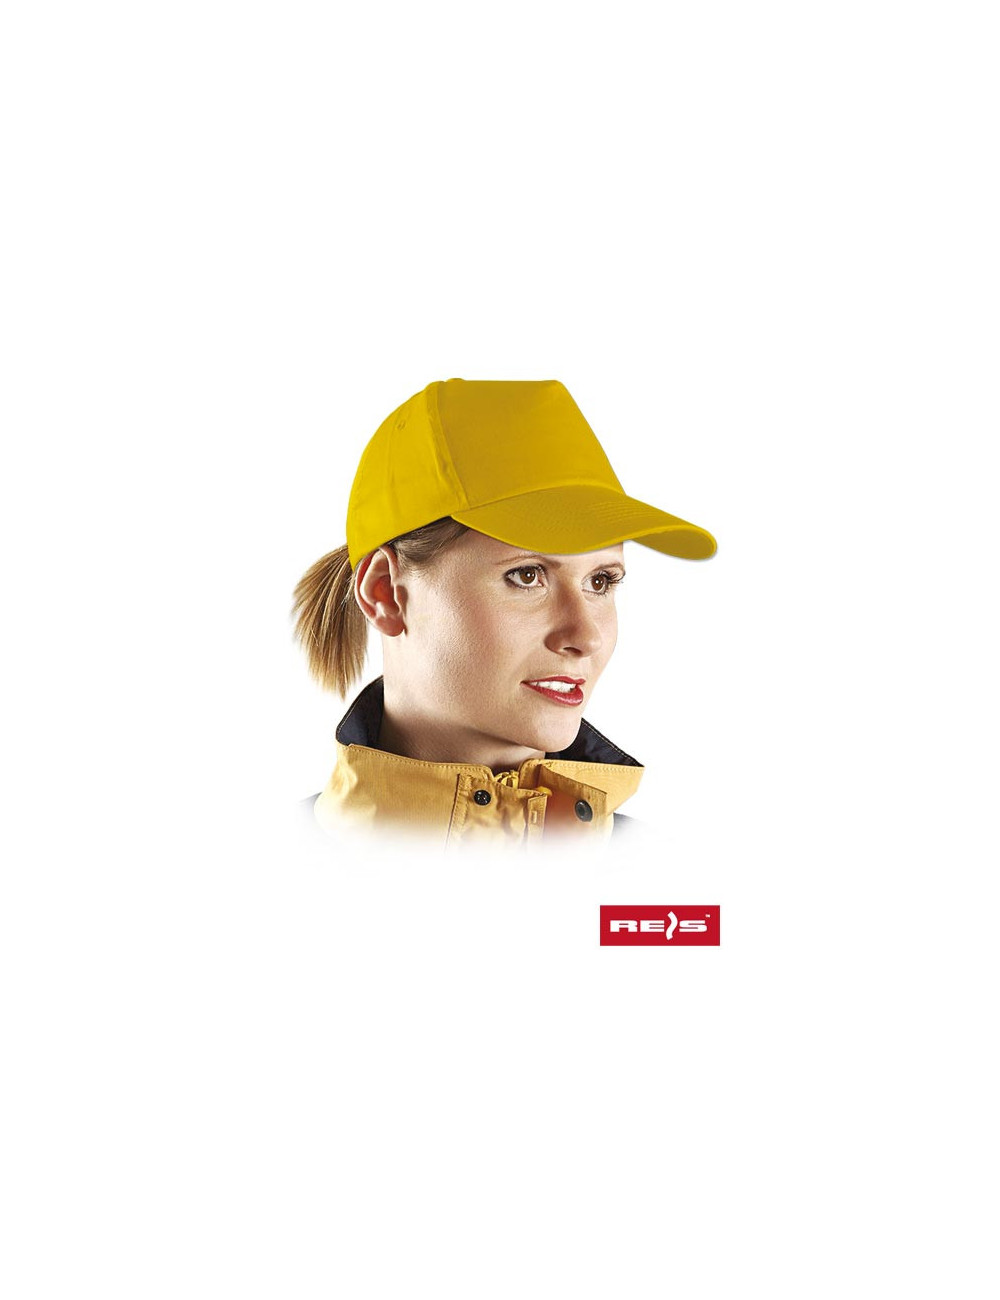 Protective cap or yellow Reis